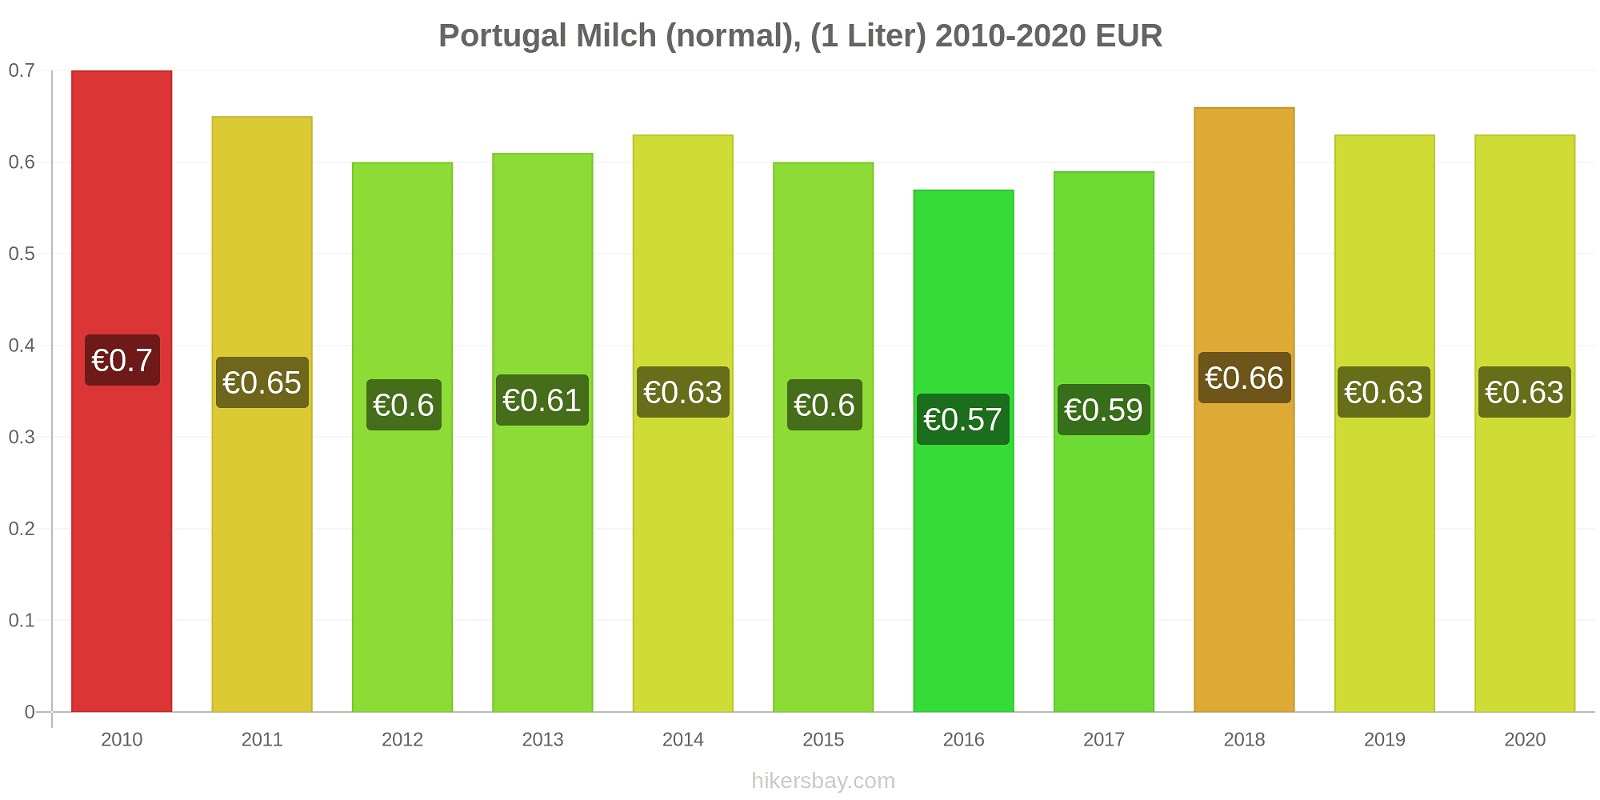 Portugal Preisänderungen (Regulär), Milch (1 Liter) hikersbay.com